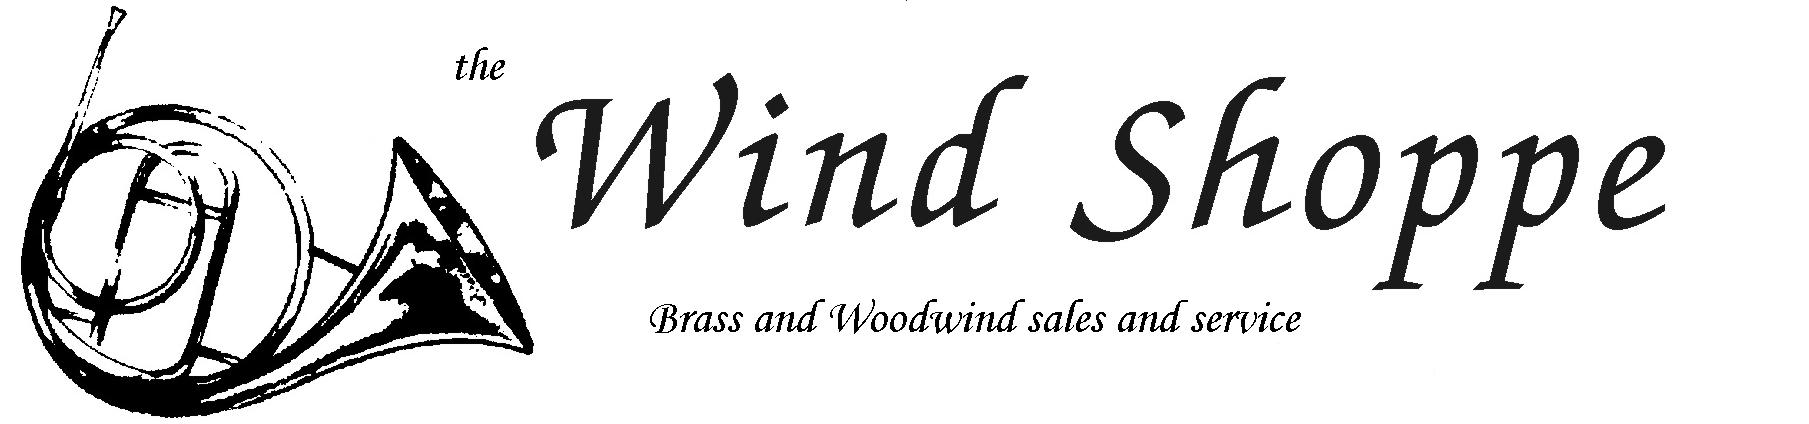 The Wind Shoppe